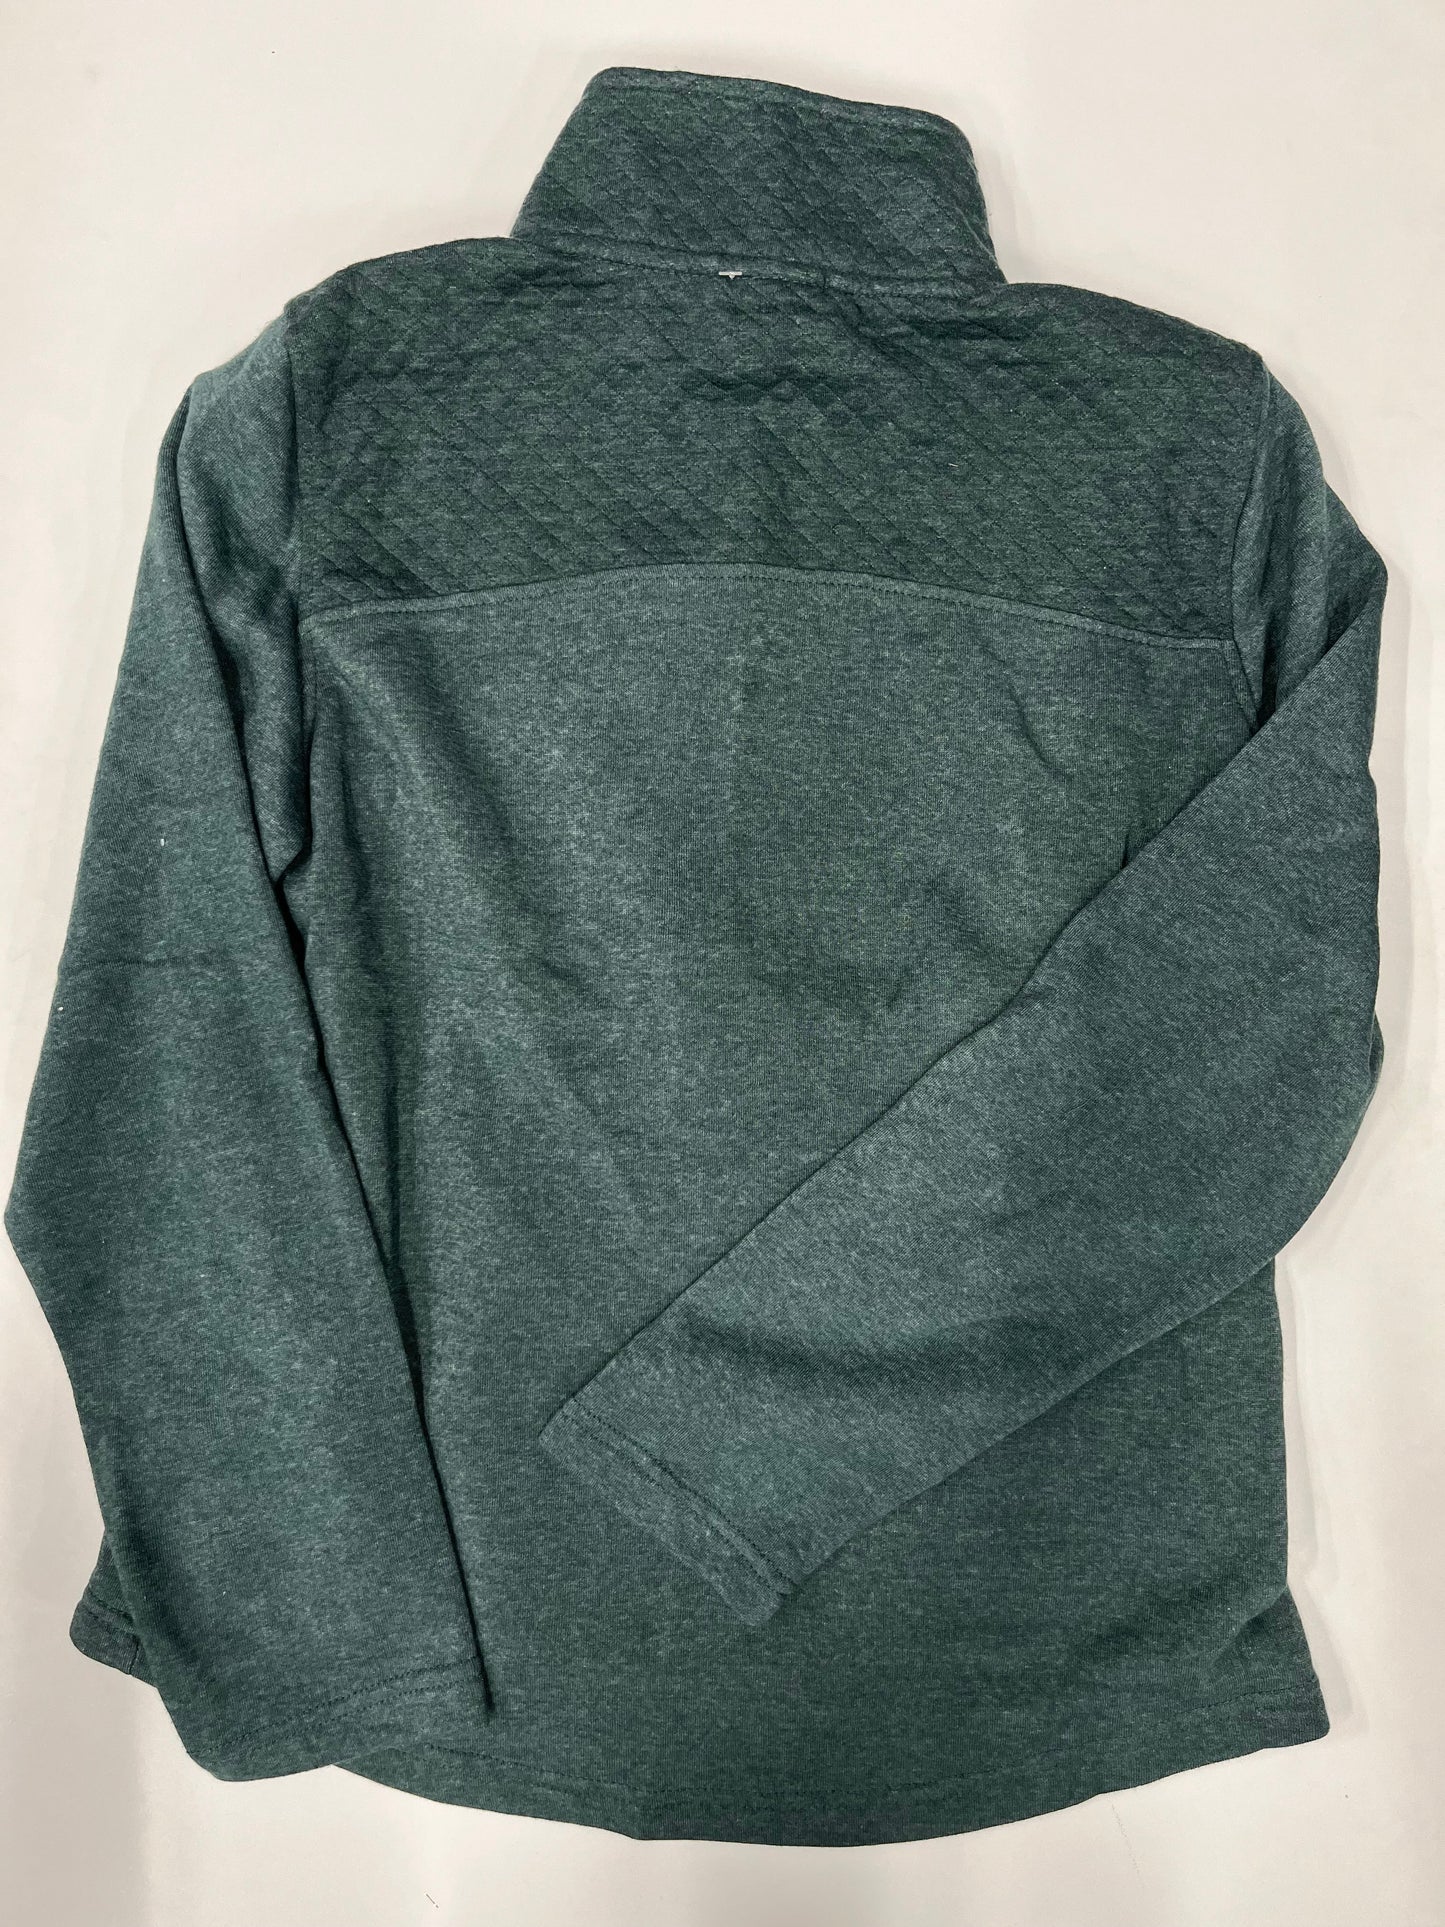 Sweatshirt Crewneck By Avalanche NWT  Size: M